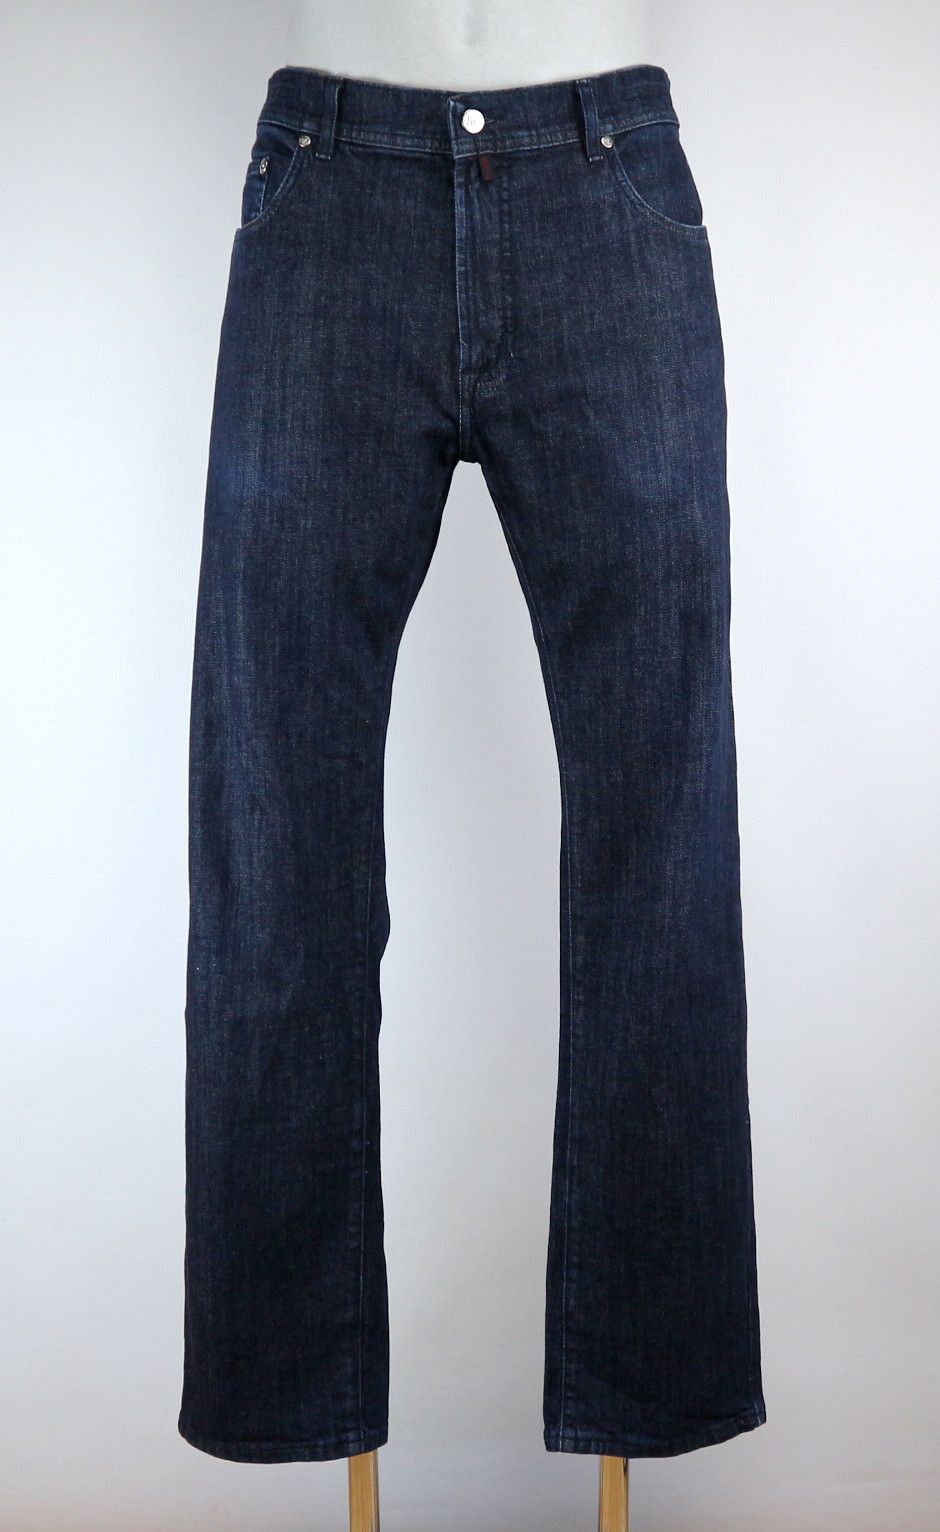 Pierre Cardin Pierre Cardin Lyon Fit jeans W38 L32 Size US 38 / EU 54 - 4 Thumbnail